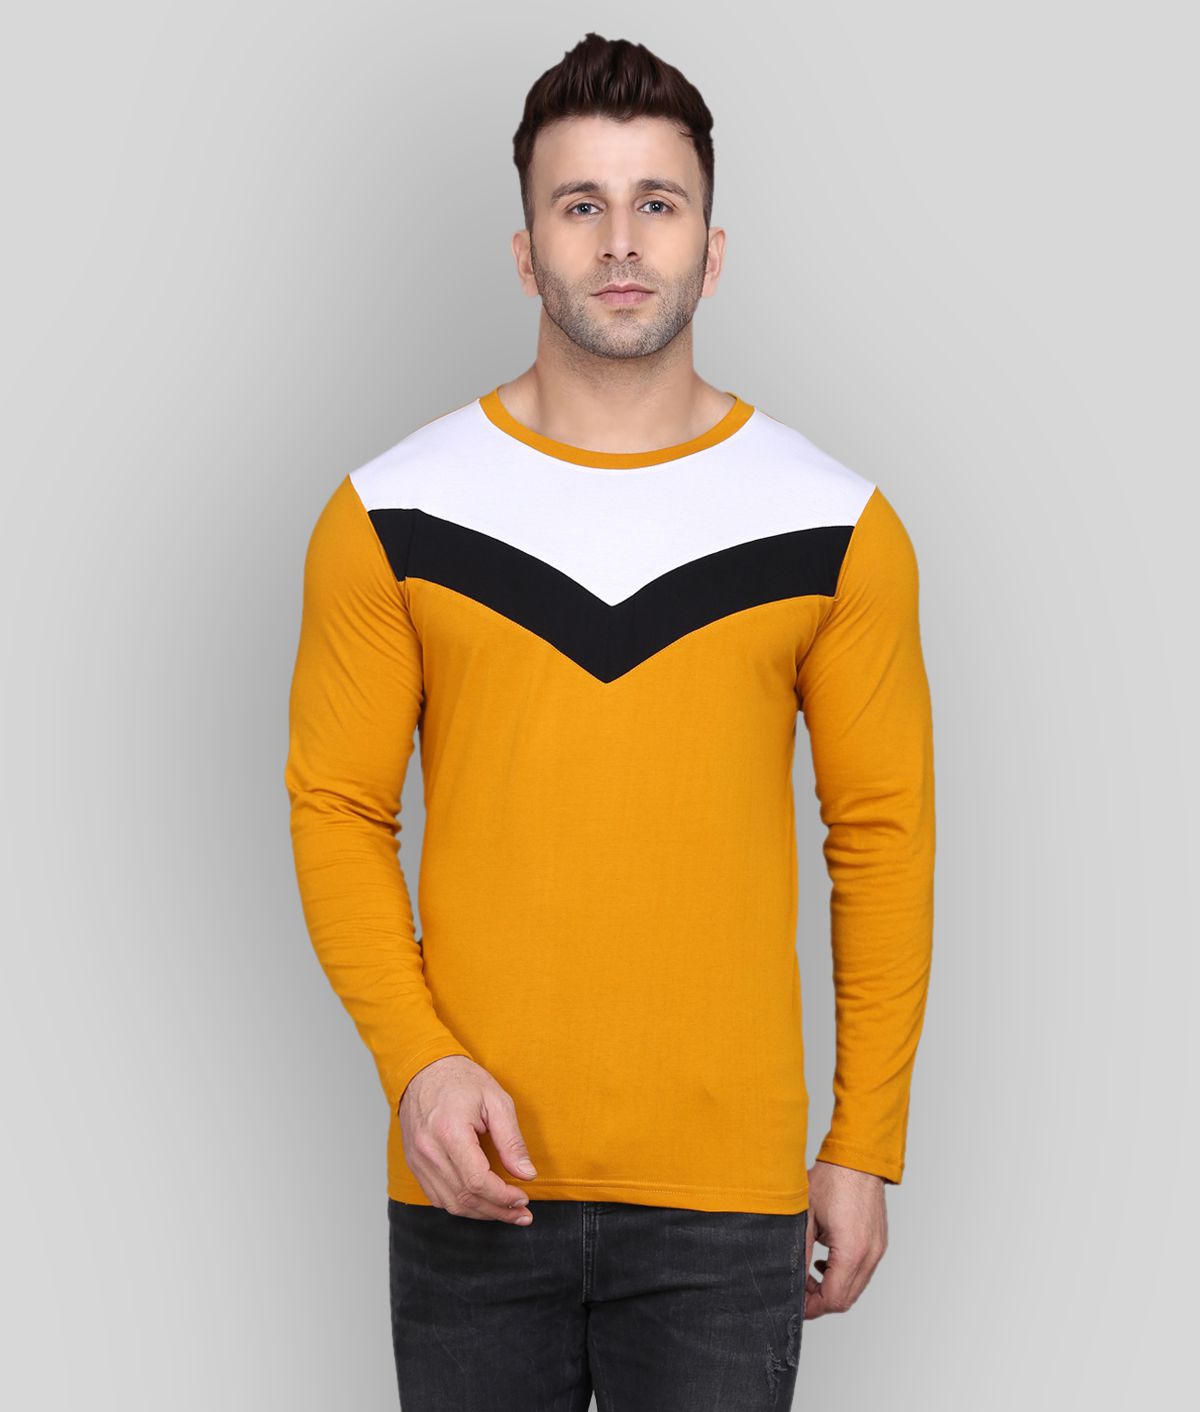     			SIDKRT - Multicolor Cotton Regular Fit Men's T-Shirt ( Pack of 1 )